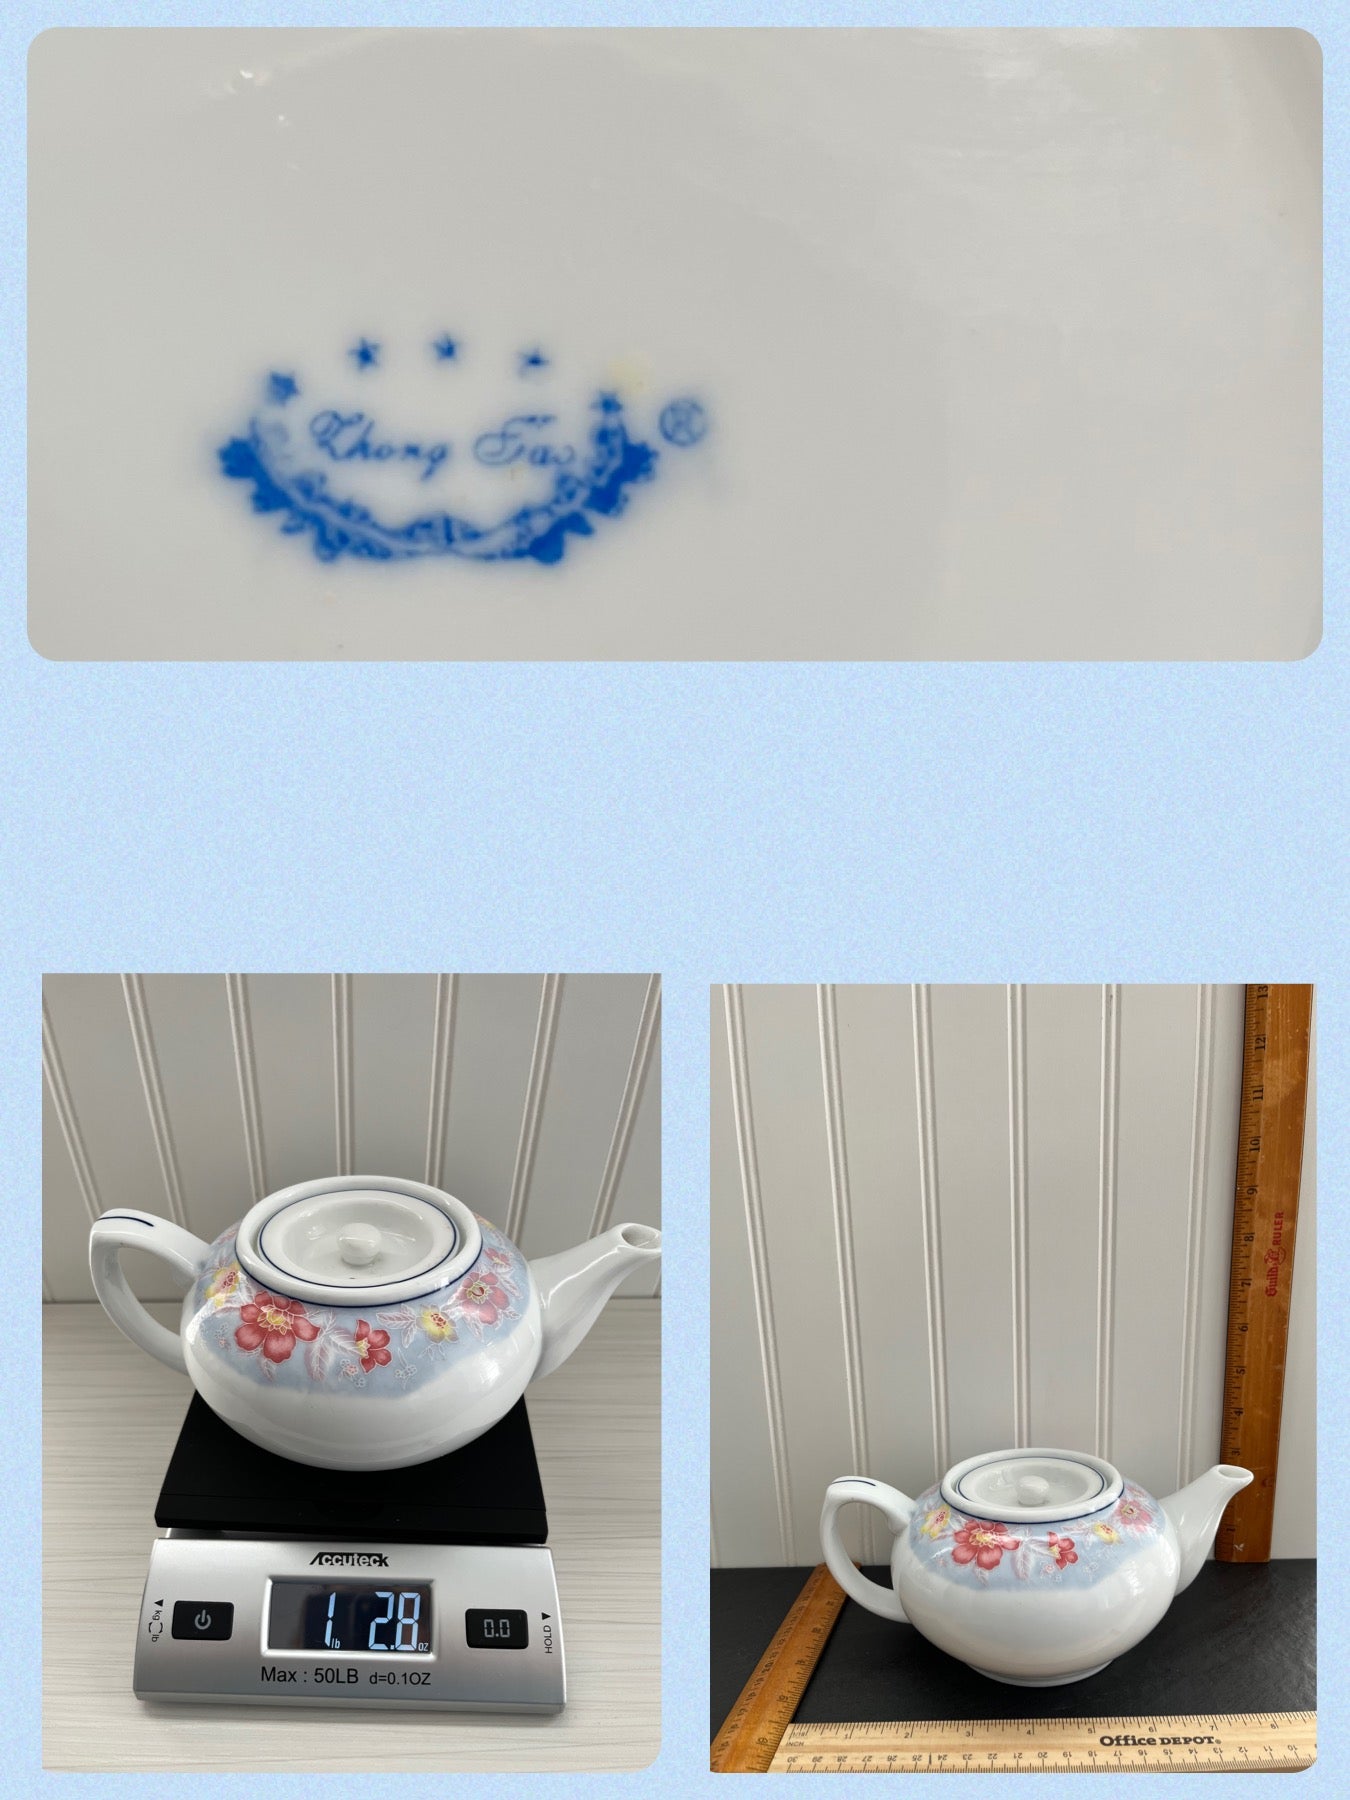 Vintage  LHONG TAO Pink, Yellow, Blue Floral Print Porcelain Tea Pot with Flat Lid